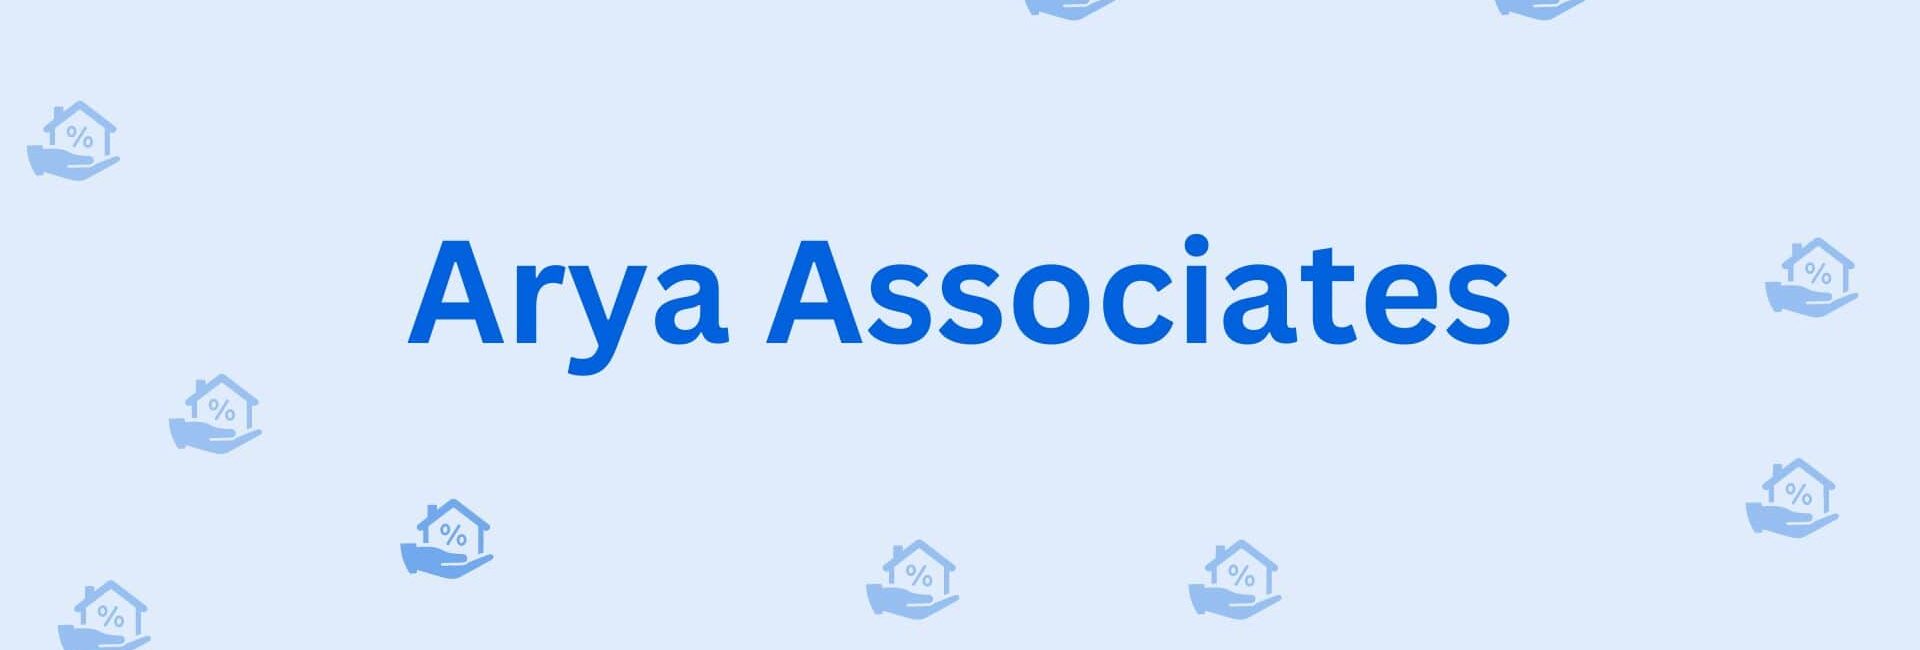 Arya Associates - Home Loan Provider in Hisar